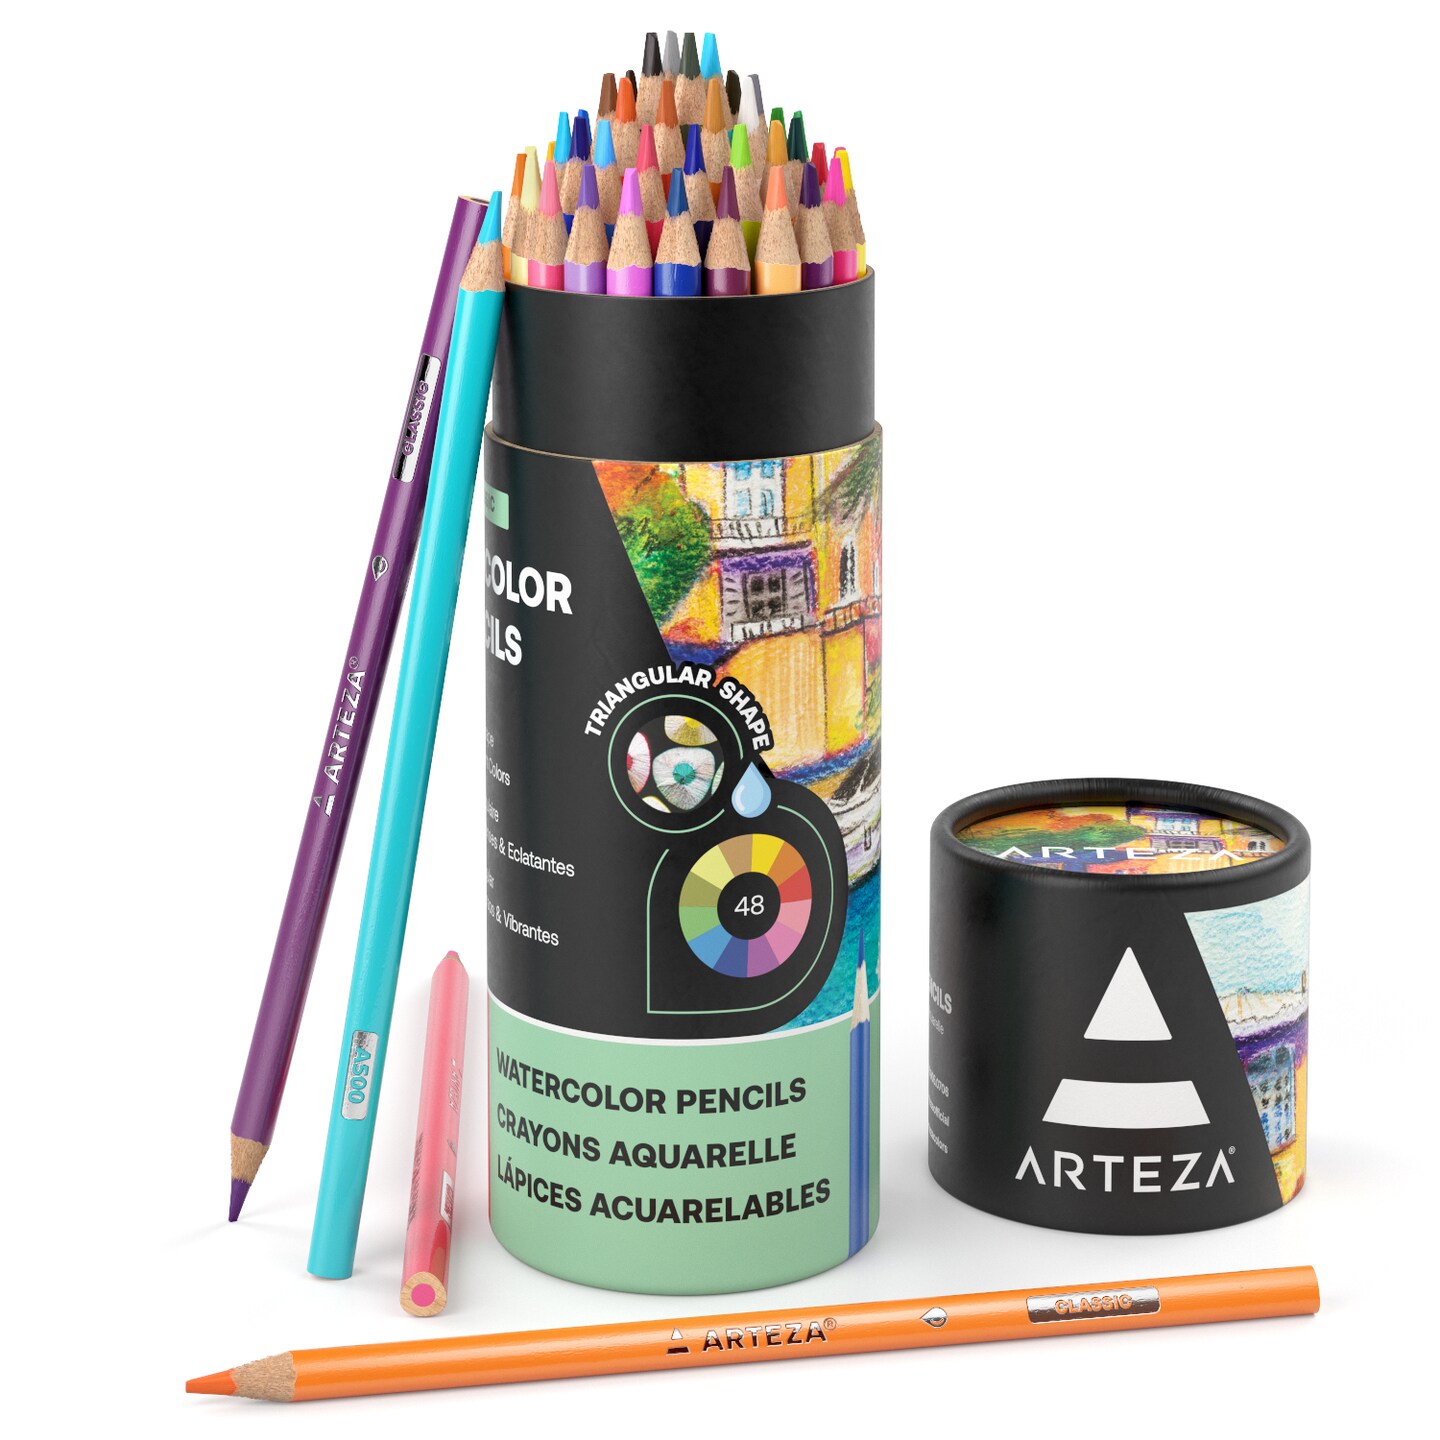 Watercolor Pencils, Professional Watercolor Pencils Set, 48